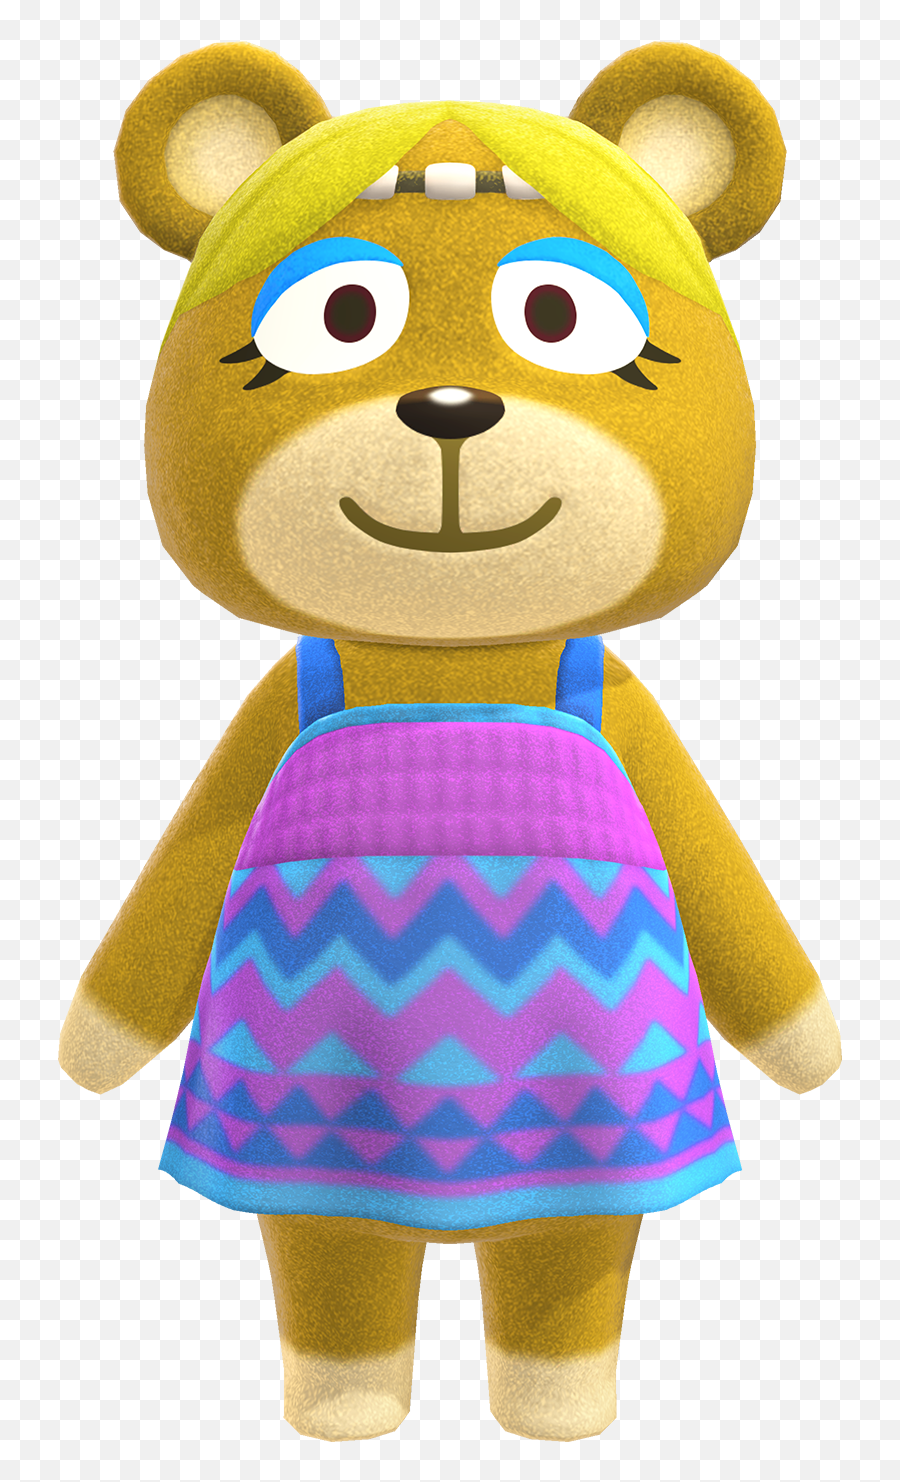 Paula - Paula Animal Crossing Emoji,Acnl Hug Emotion